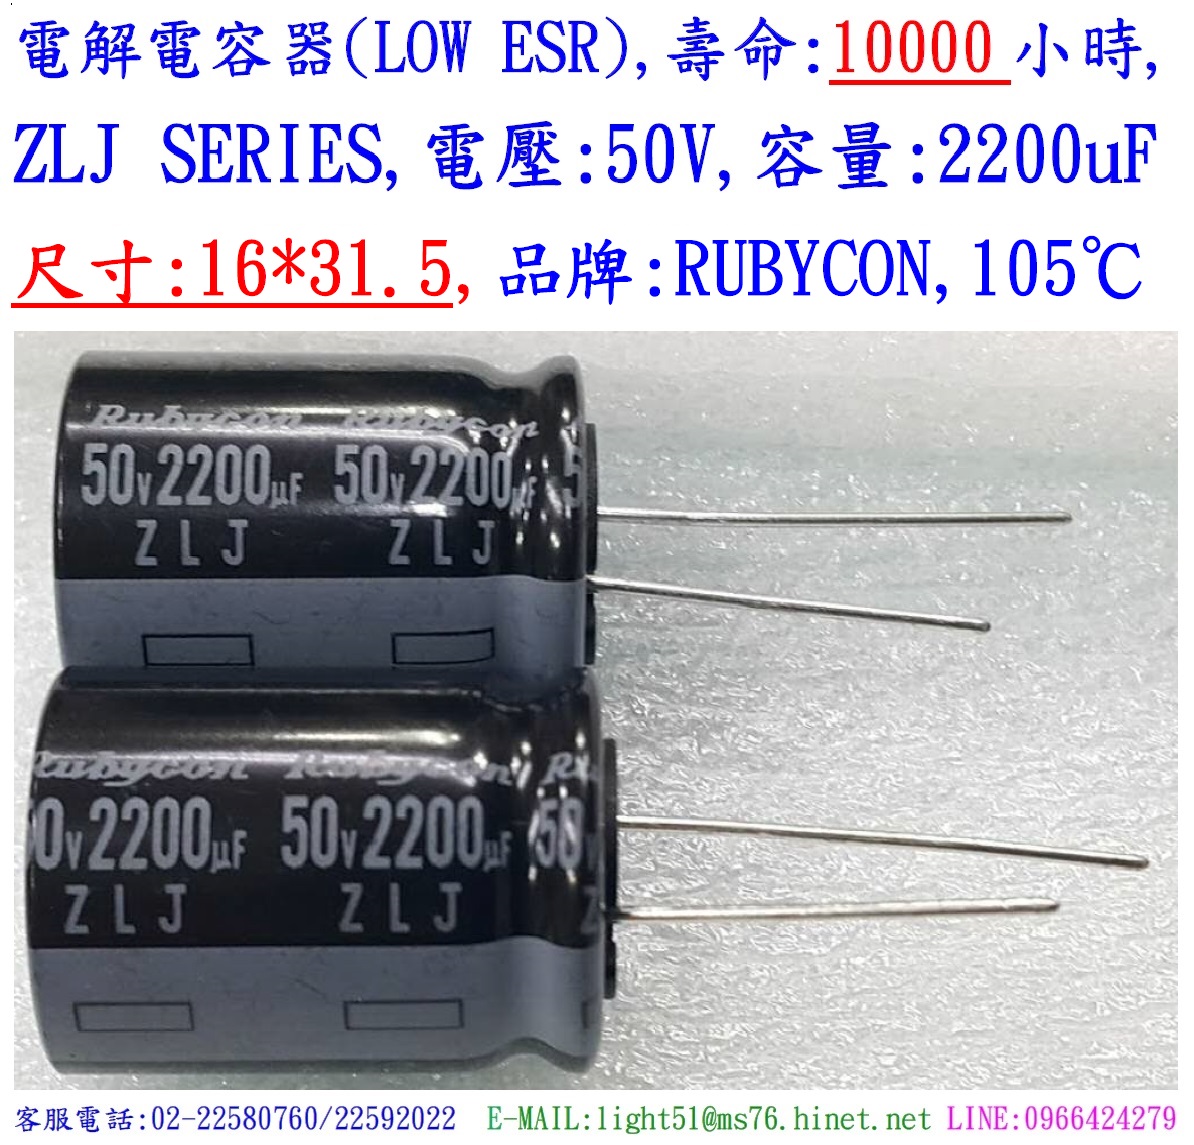 ZLJ,50V,2200uF,尺寸:16*31.5,電解電容器(LOW ESR),壽命:10000小時,Rubycon